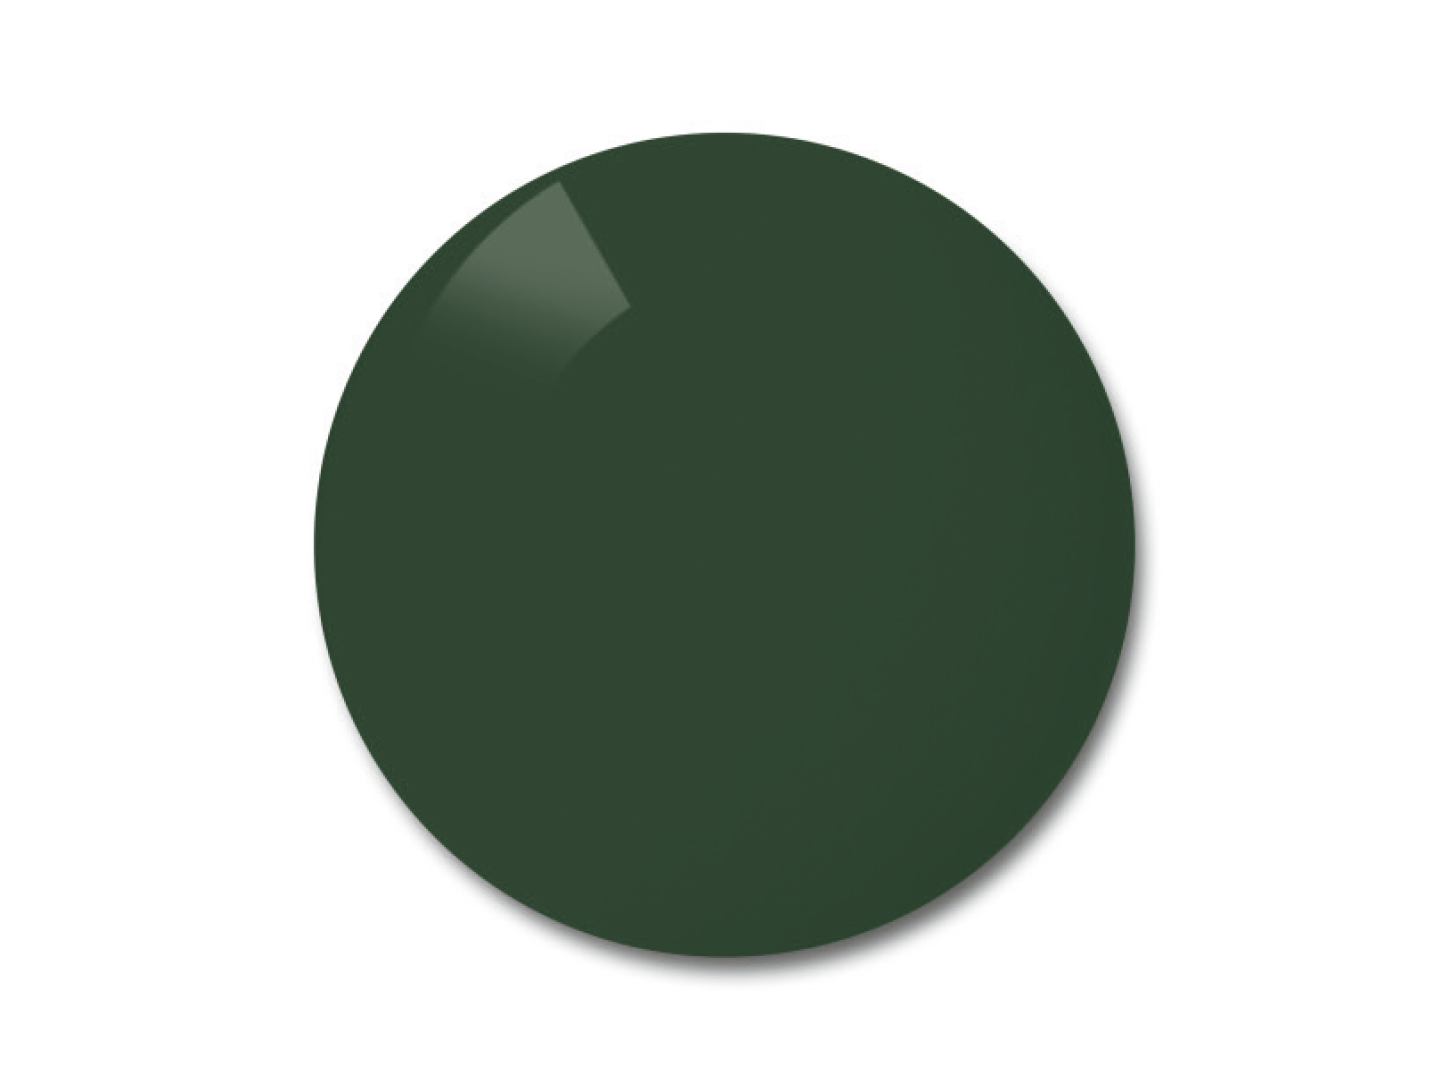 Fargeeksempel for Pioneer (grågrønne) polariserte glass.